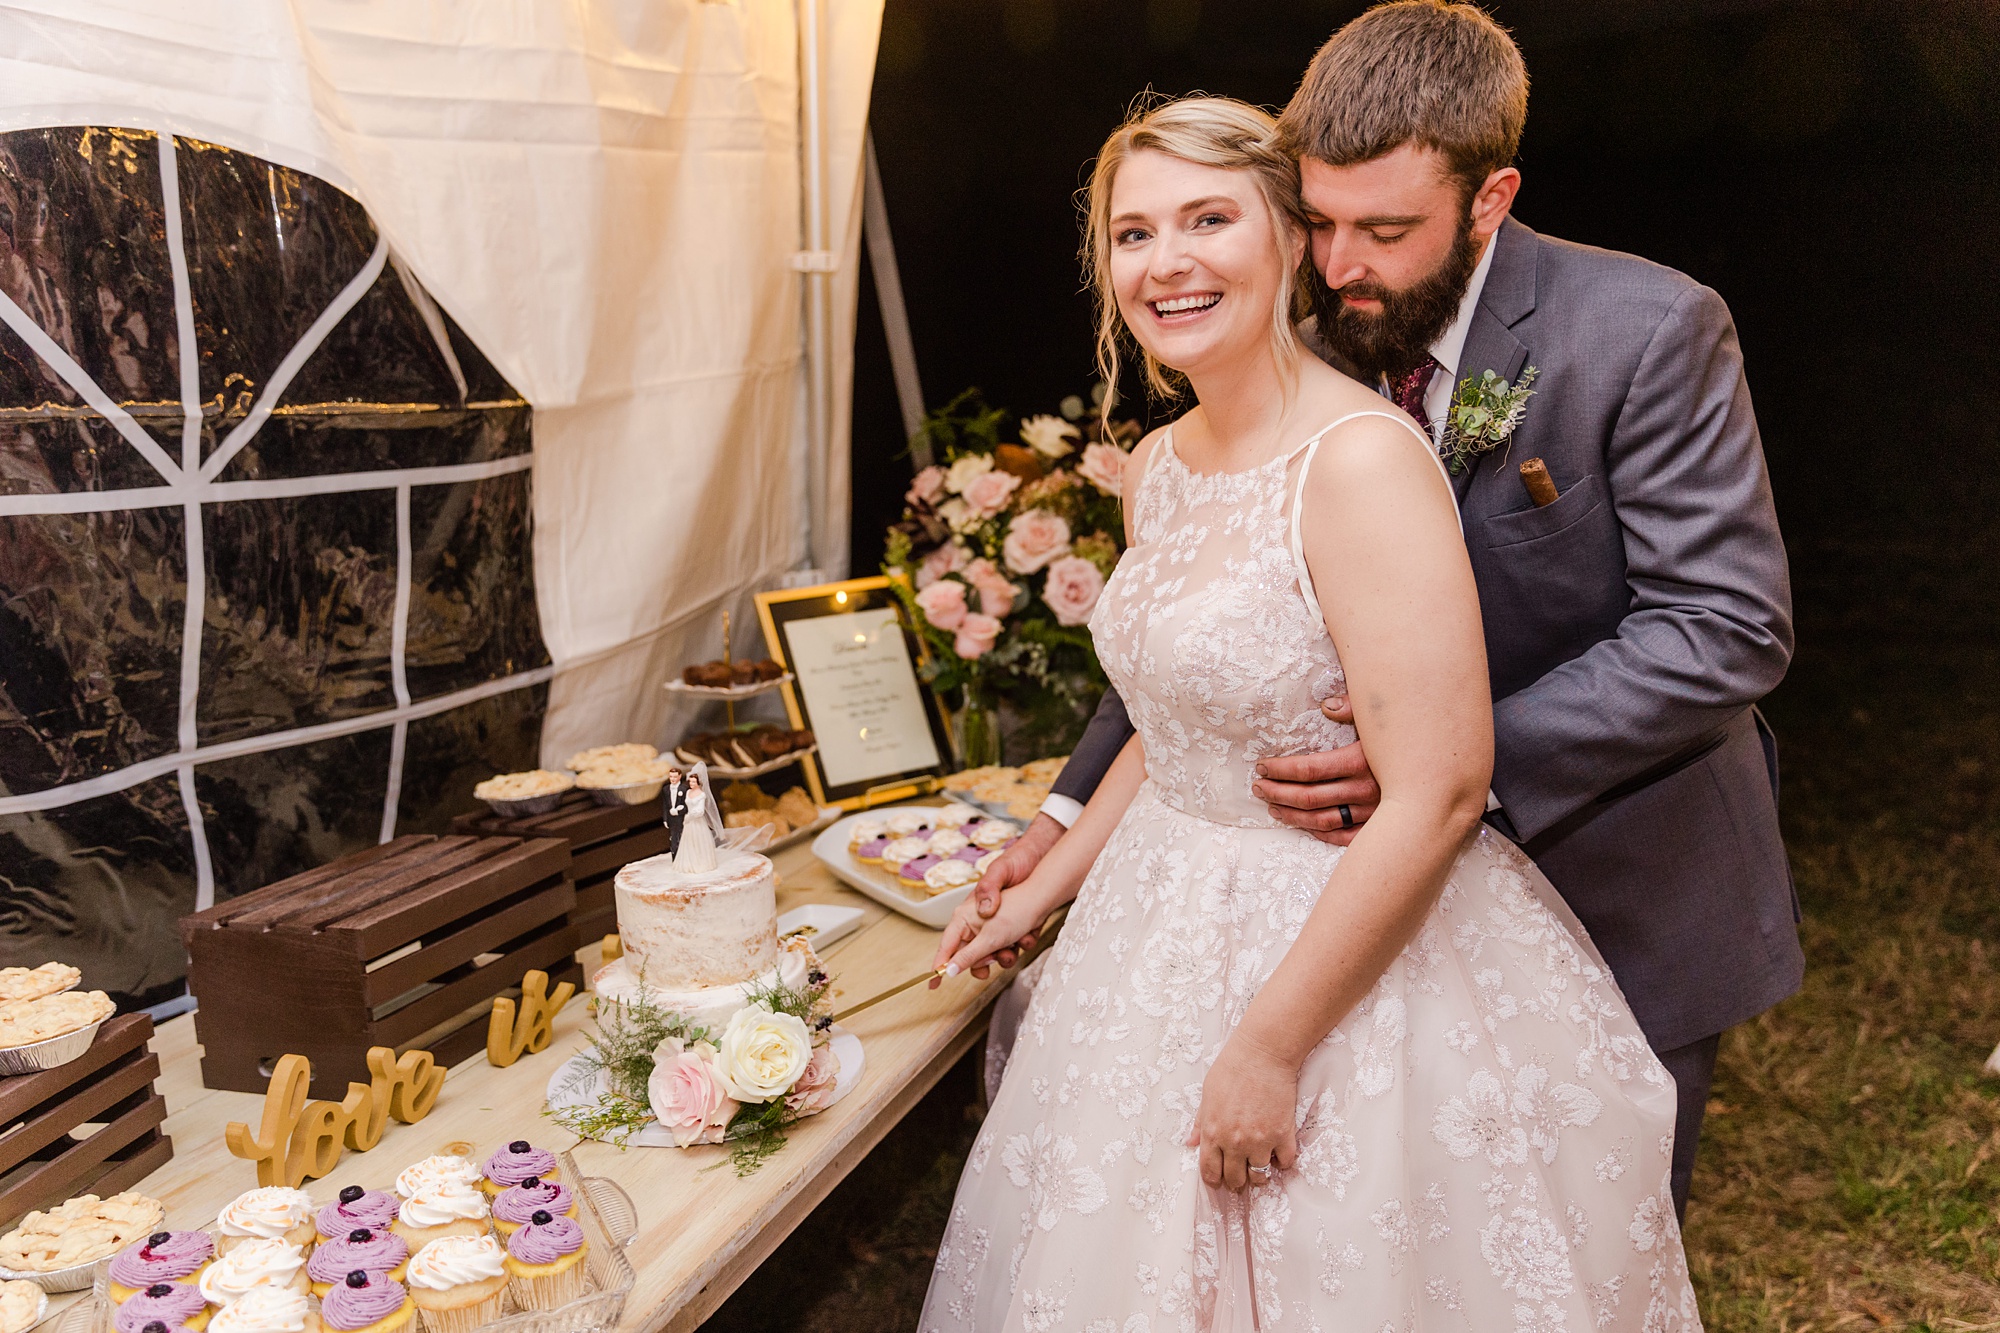 newlyweds cut wedding cake during PA wedding reception